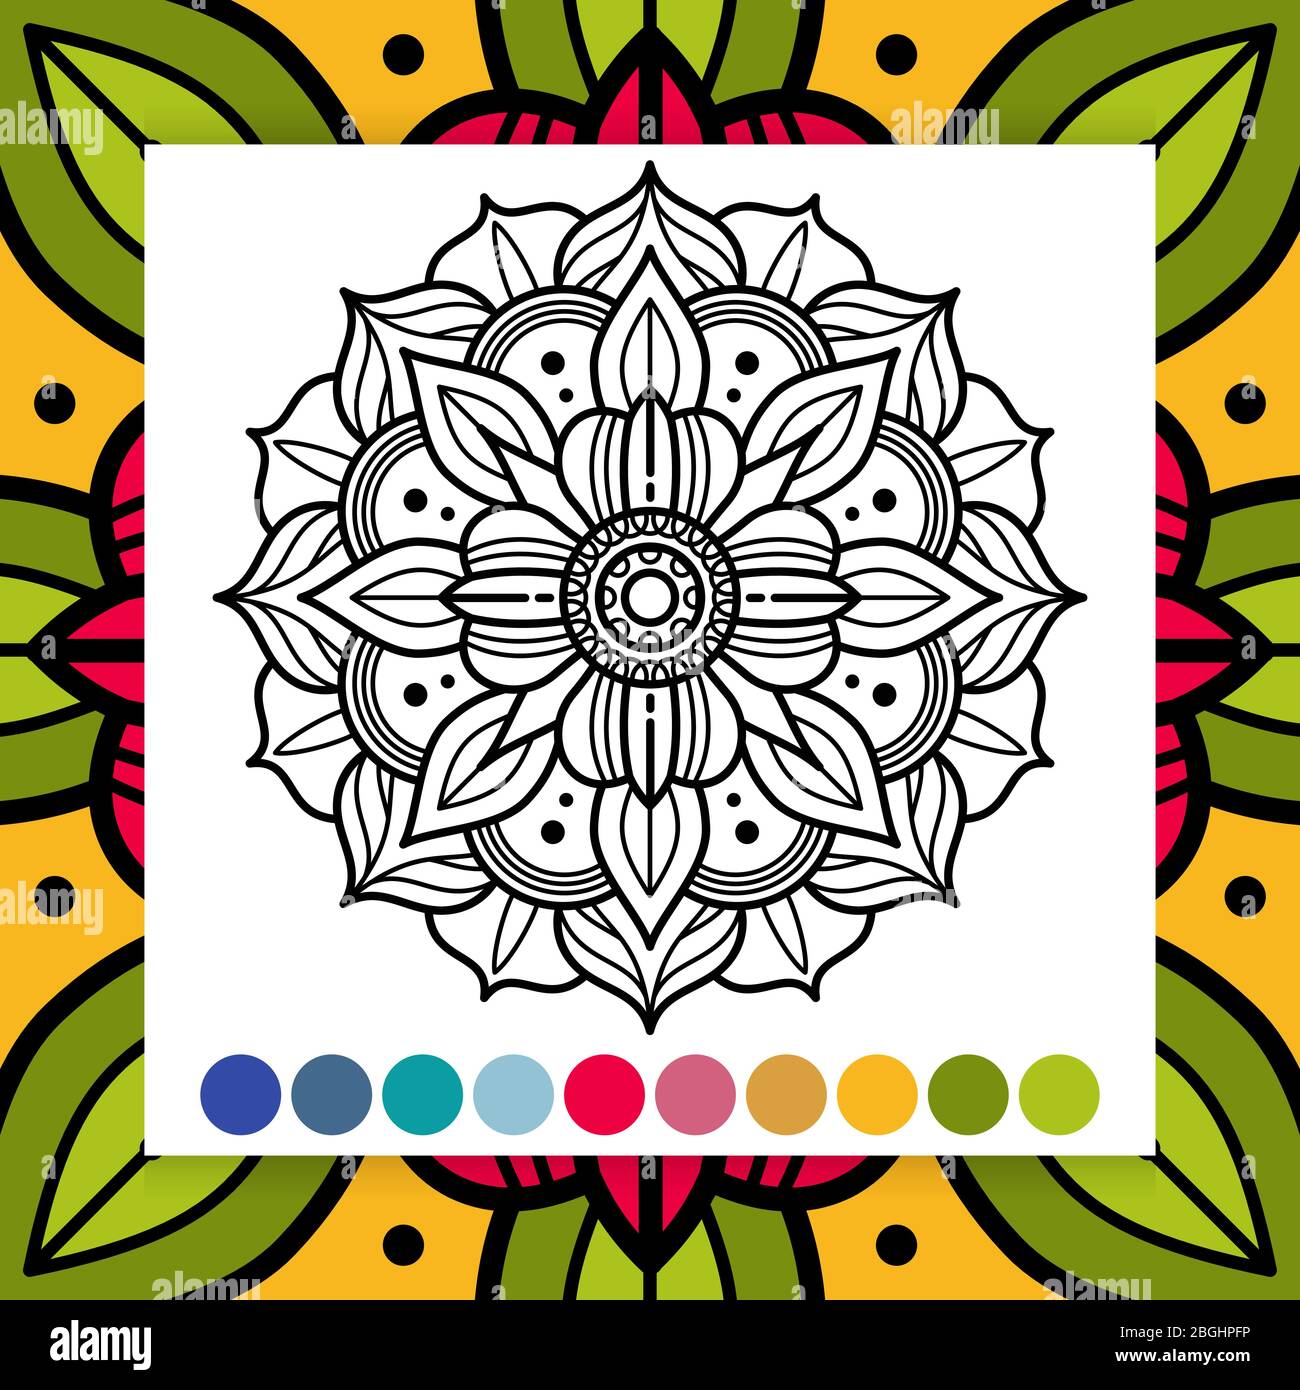 Orientalisches Blumen-Mandala. Antistress Erwachsene Malseite mit Farbmuster. Vektorgrafik Stock Vektor